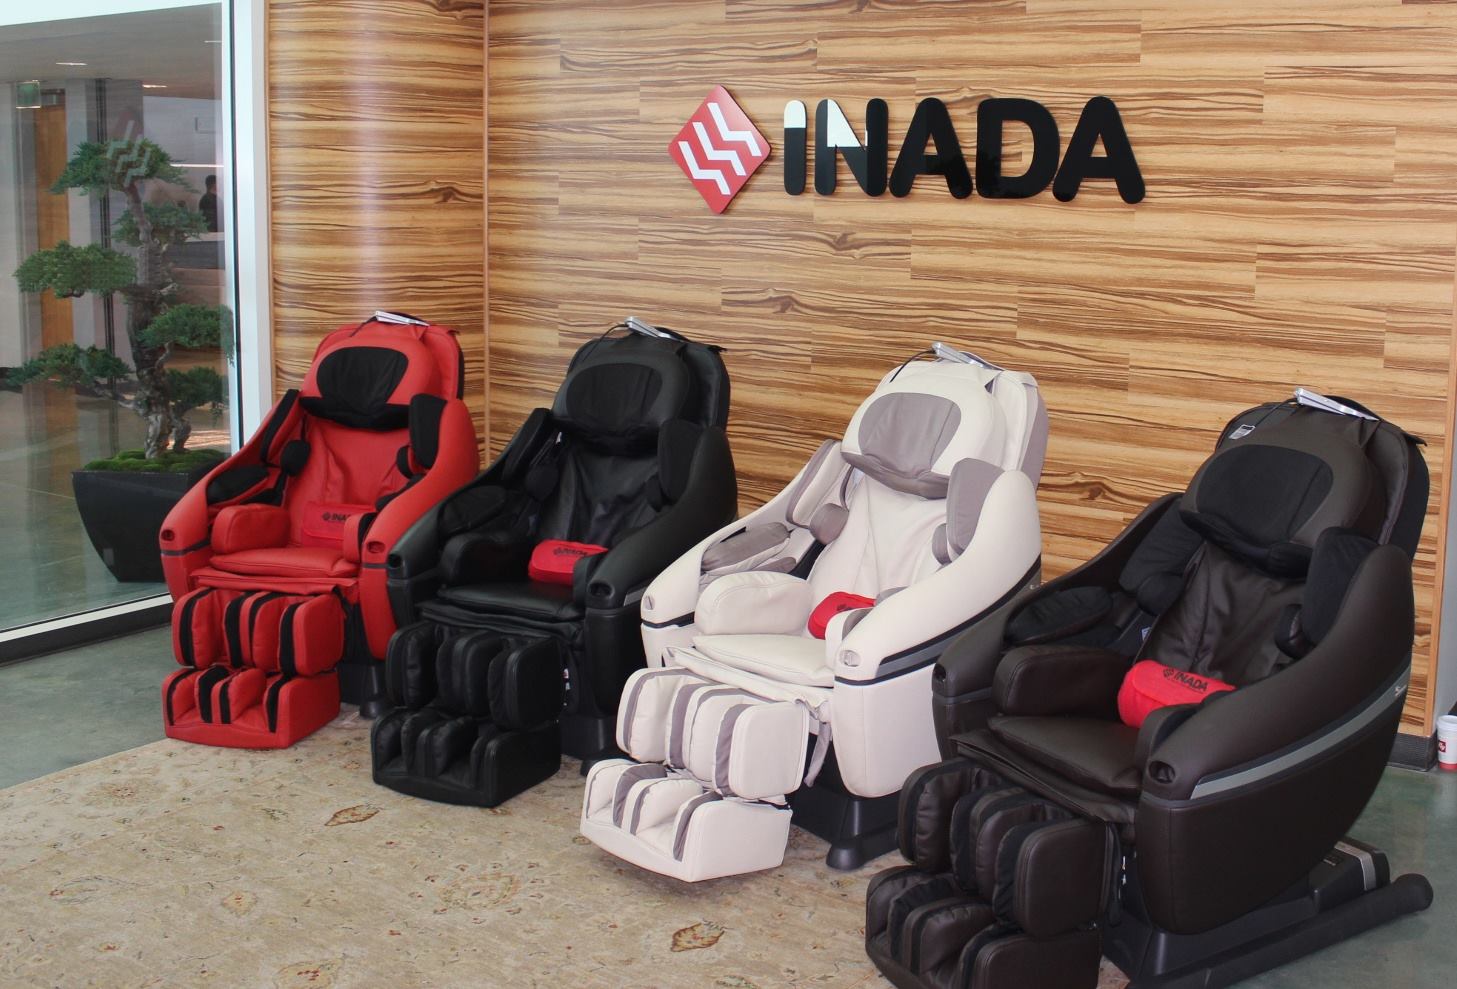 Inada Massage Chairs at Costco Tigard